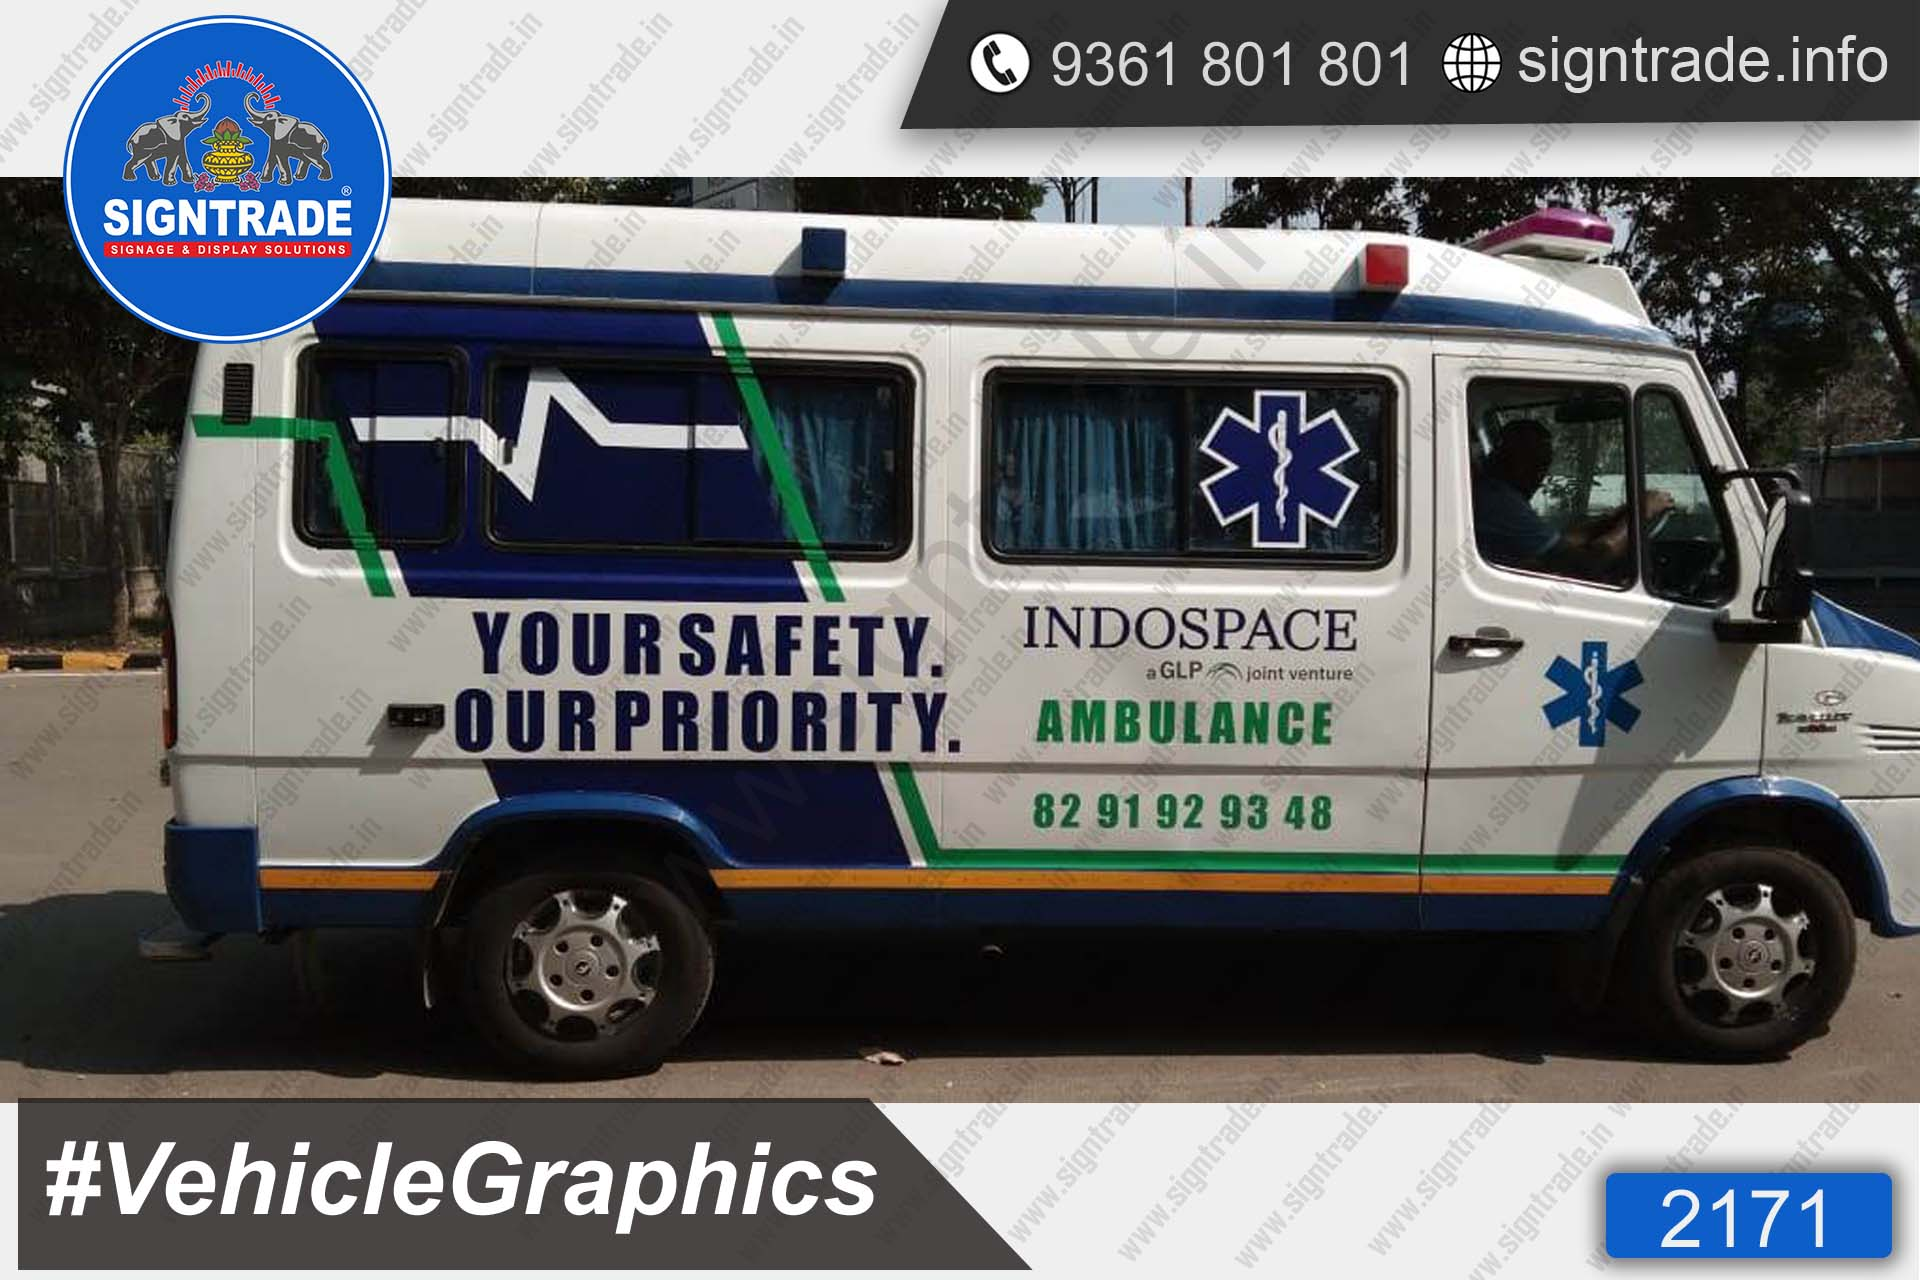 Indospace Vehicle Graphics